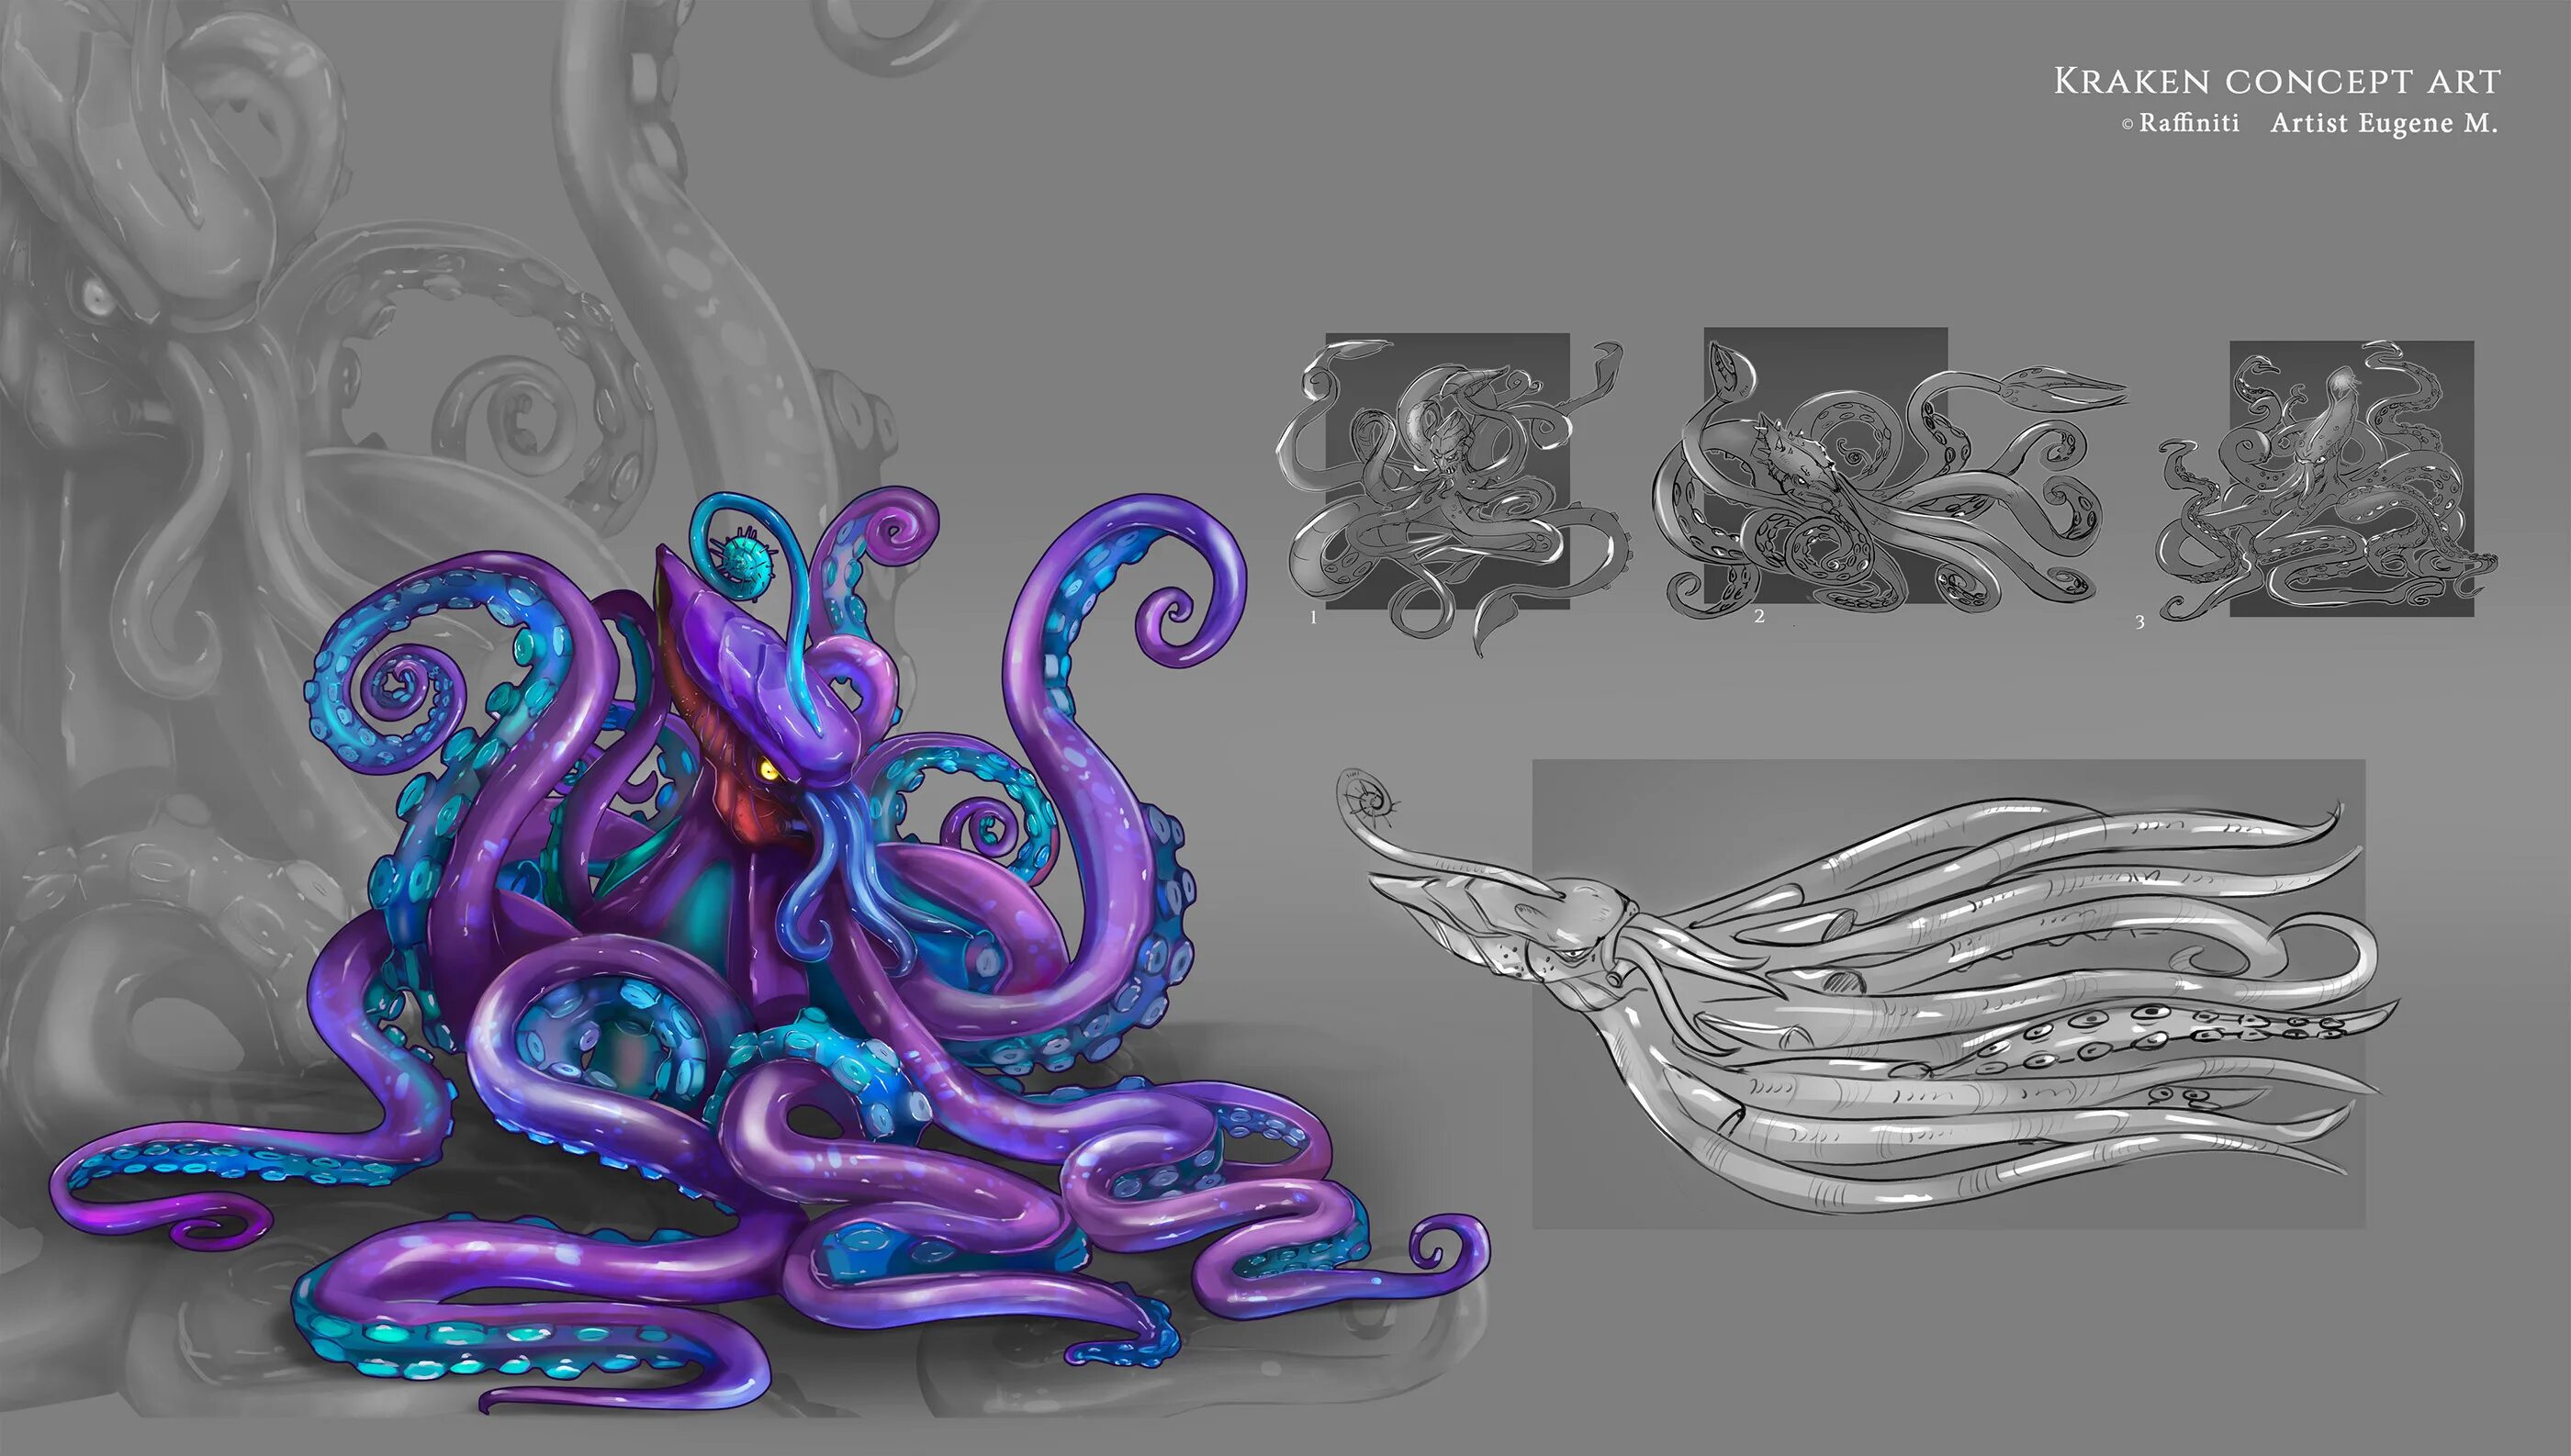 Kraken зеркало 3dark link com. Кракен наркошоп. Кракен концепт. Кракен Art. Нацбата «Кракен».